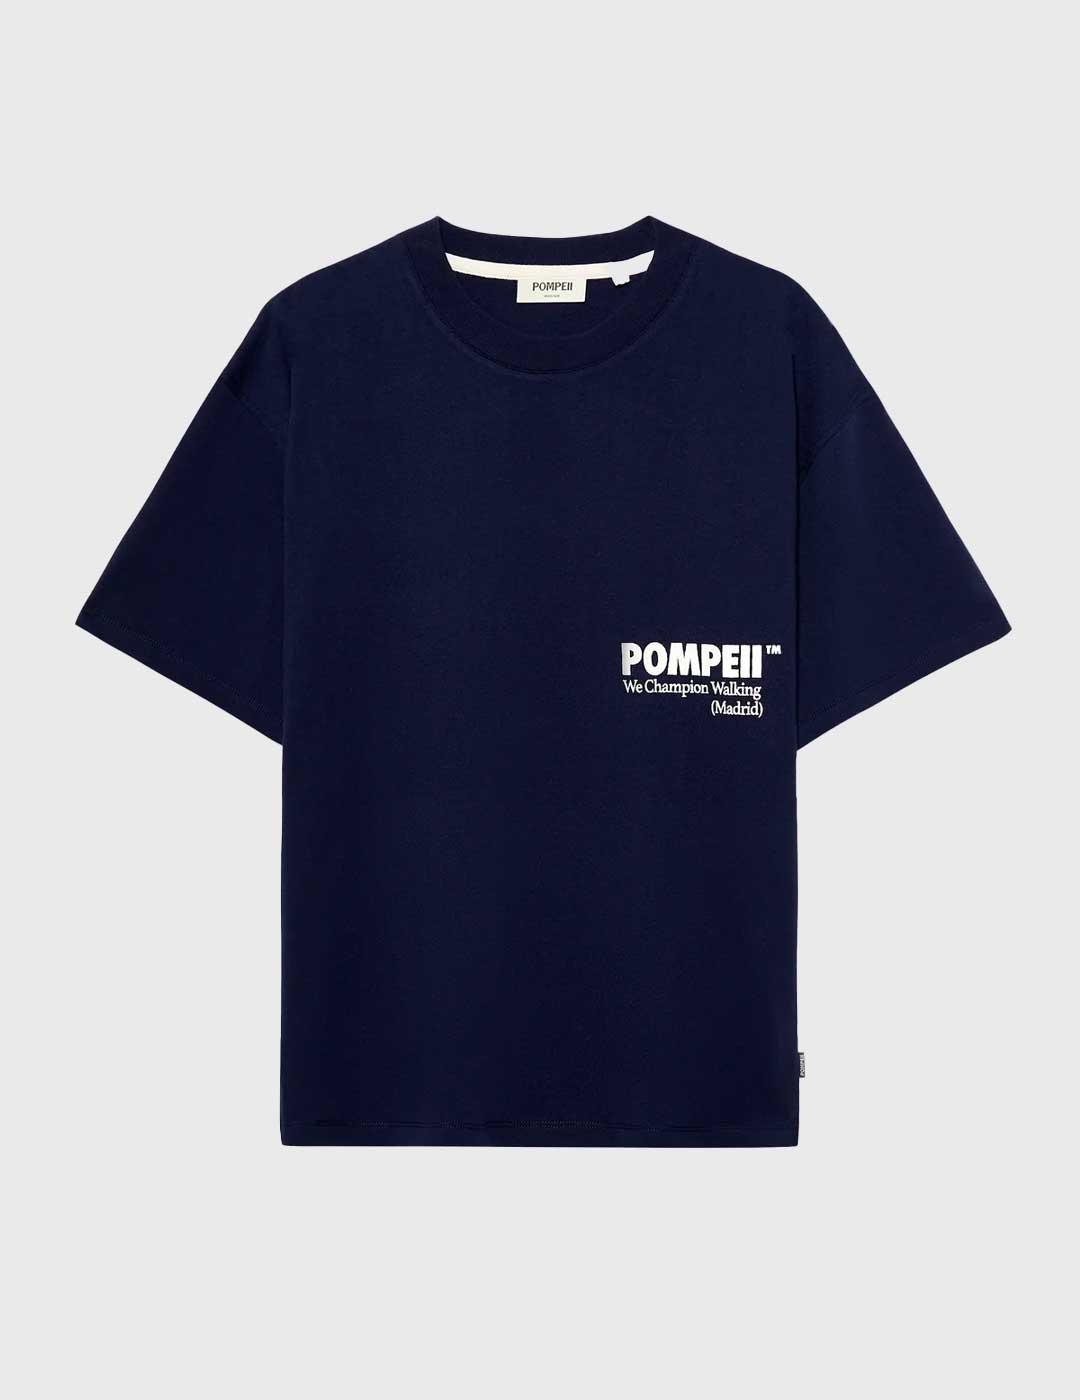 Camiseta Pompeii Brand Boxy Graphic azul marino para hombre